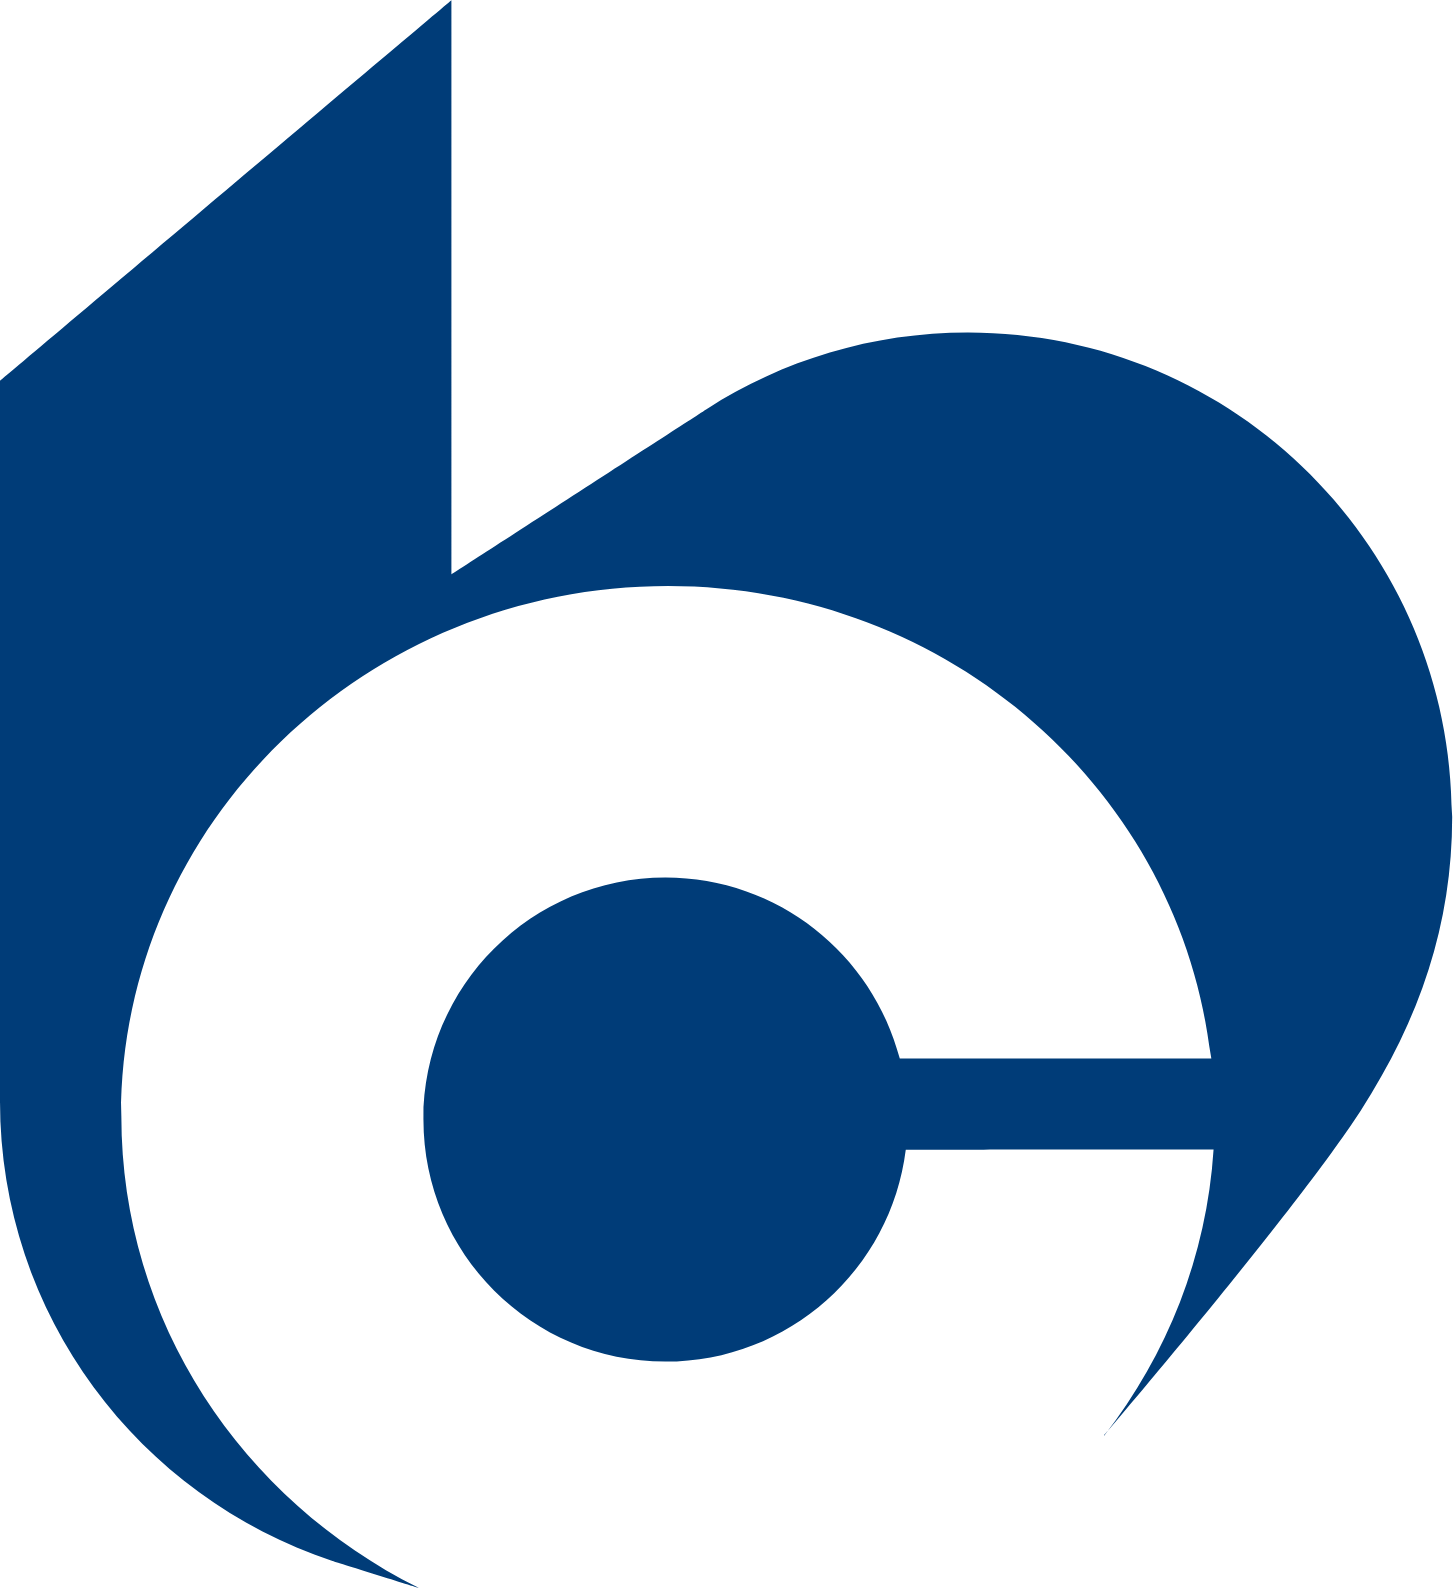 Bank of Communications logo (transparent PNG)